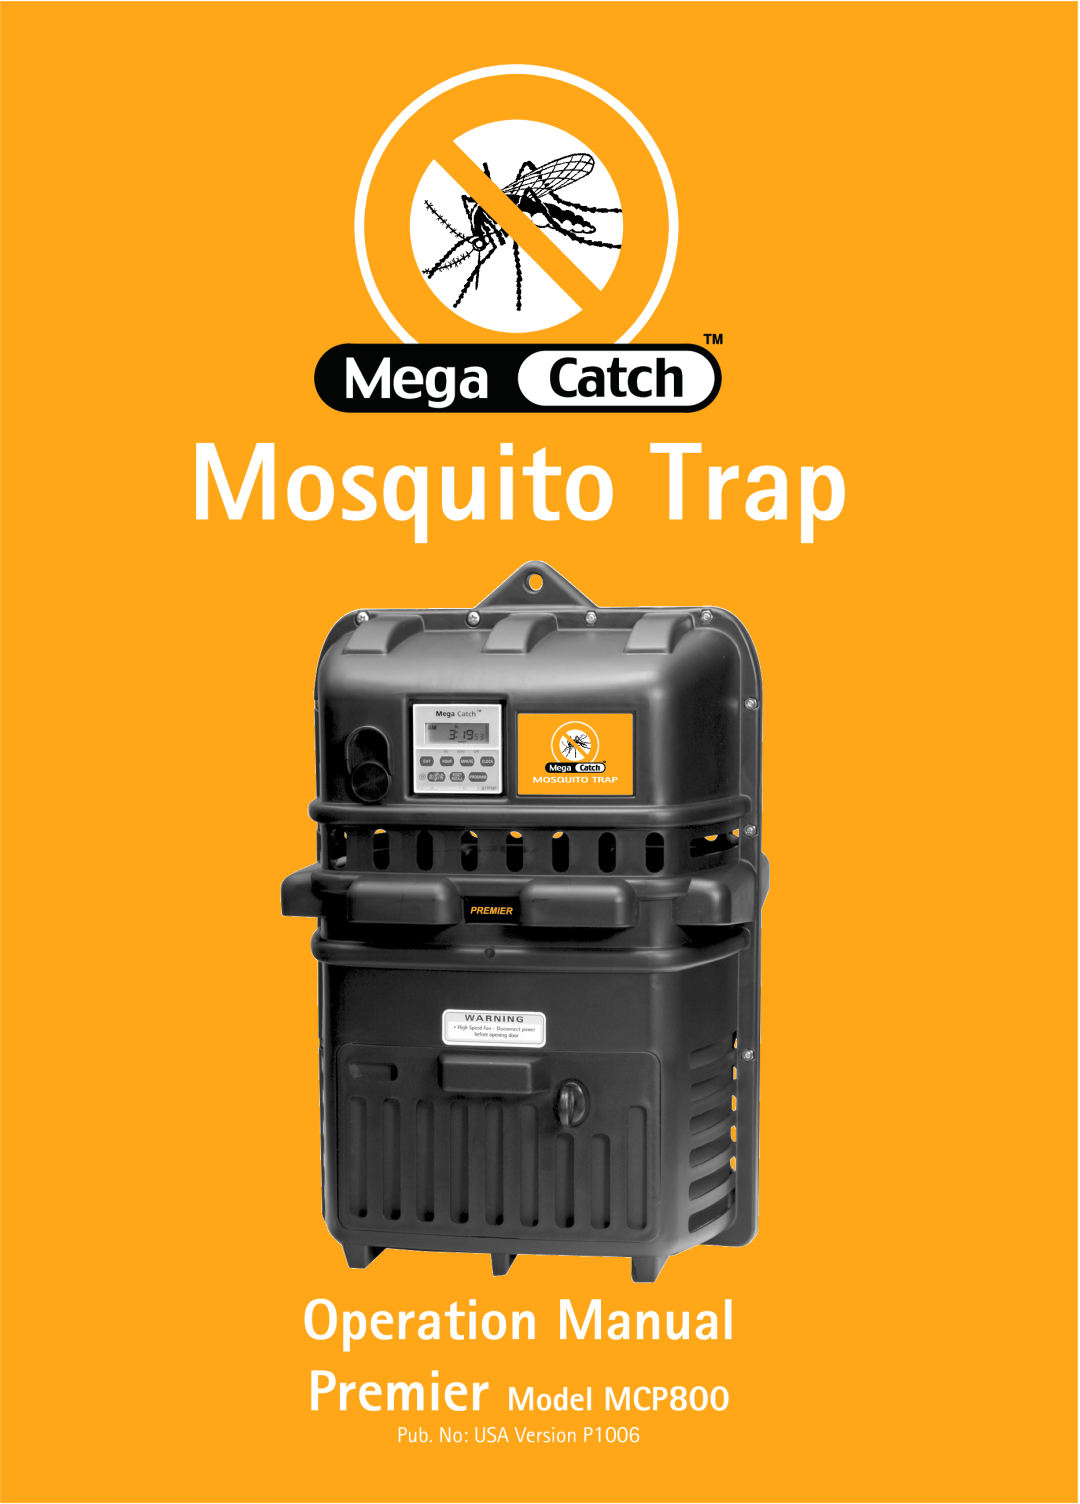 Mega Catch operation manual Mosquito Trap, Operation Manual, Premier Model MCP800, Pub. No USA Version P1006 